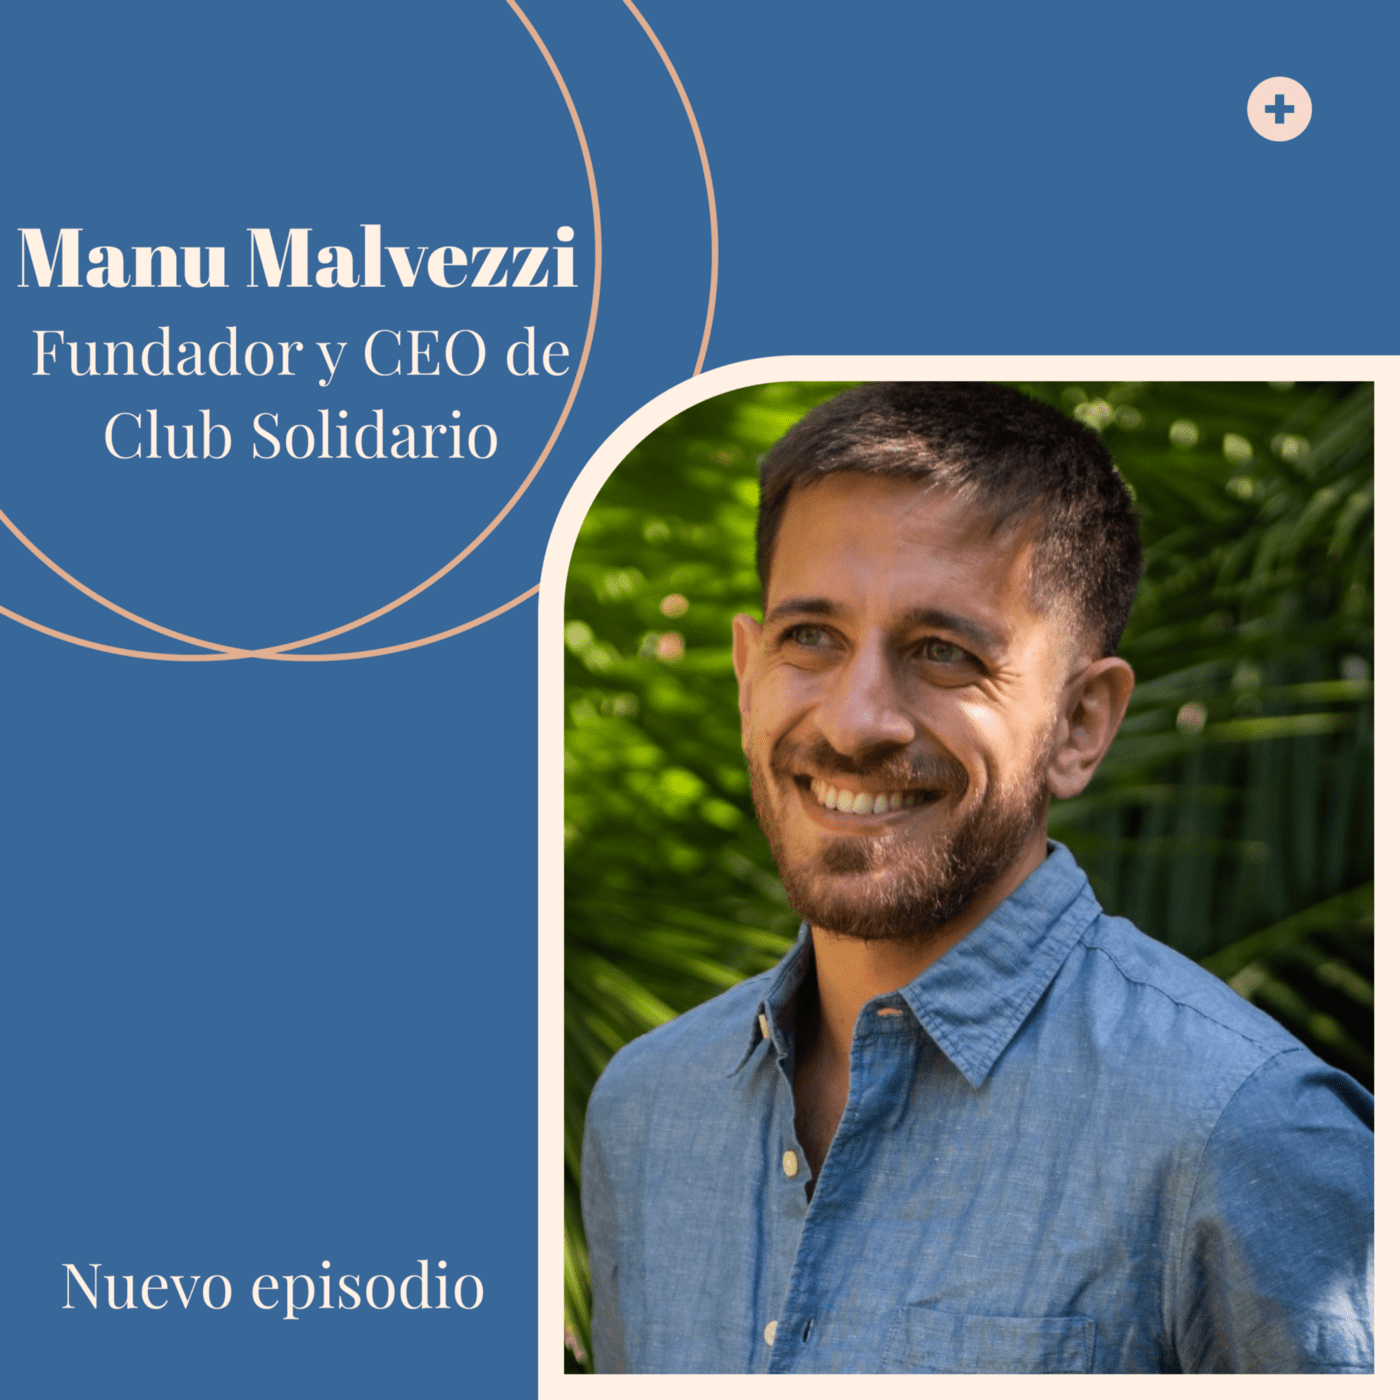 Manu Malvezzi Cofounder de club solidario